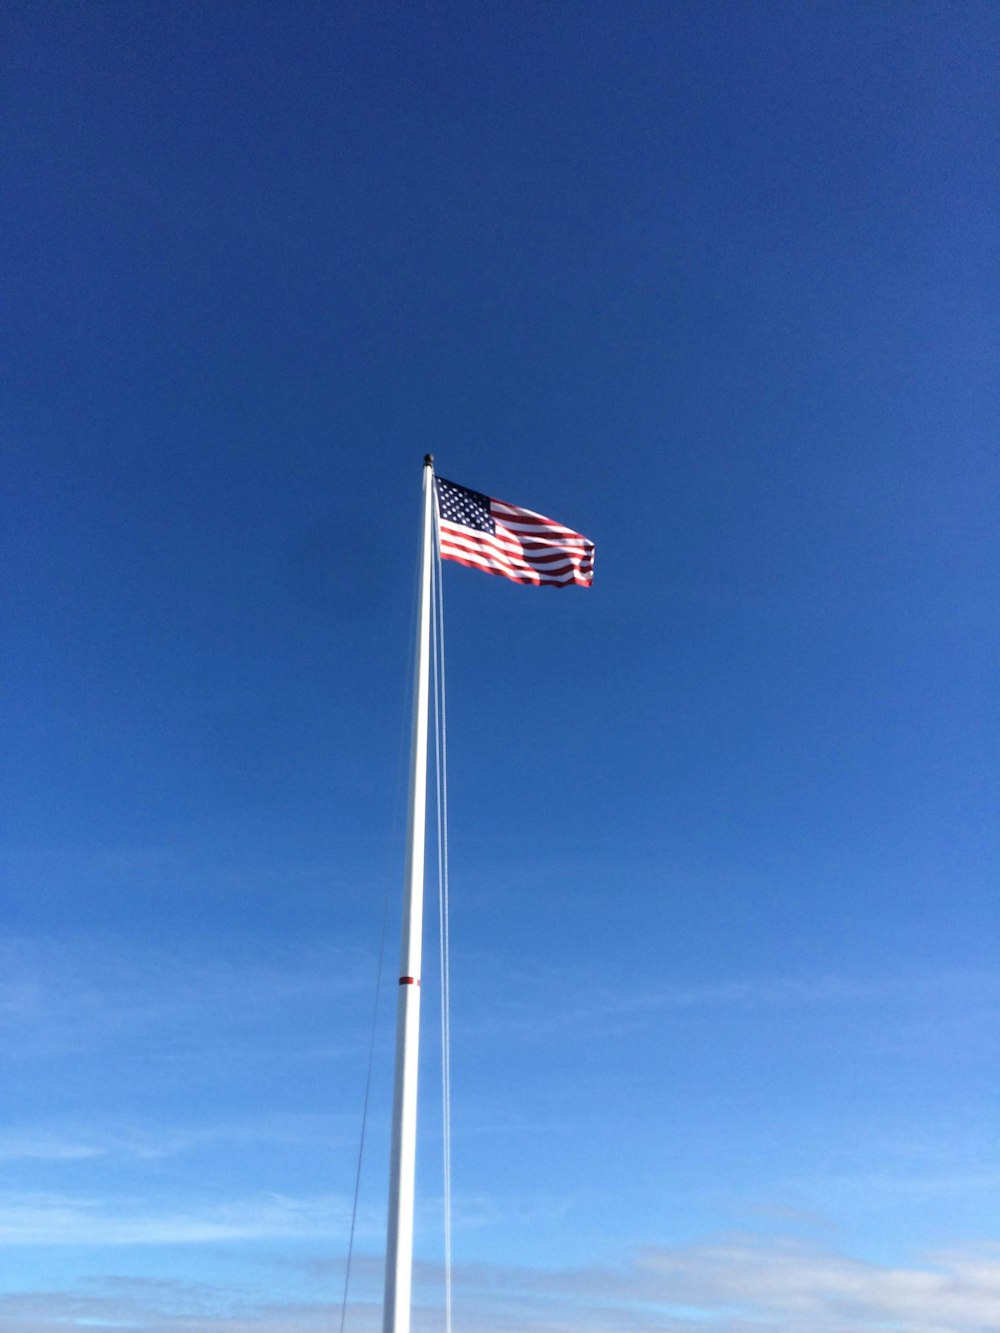 una bandiera su un palo con una barca sullo sfondo